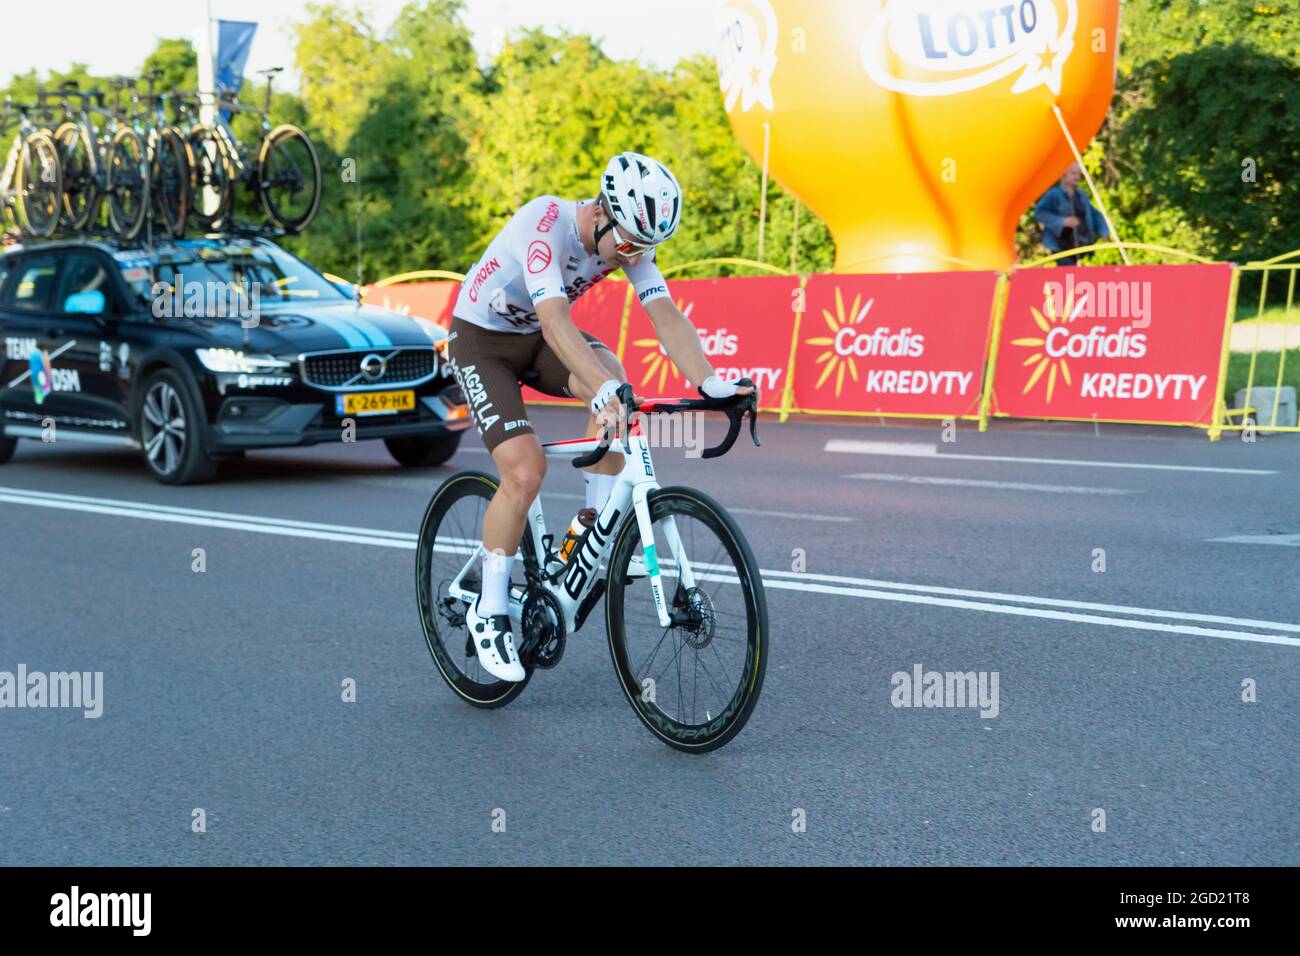 Chelm, Lubelskie, Poland - August 9, 2021: 78th Tour de Pologne, AG2R cyclist Stock Photo